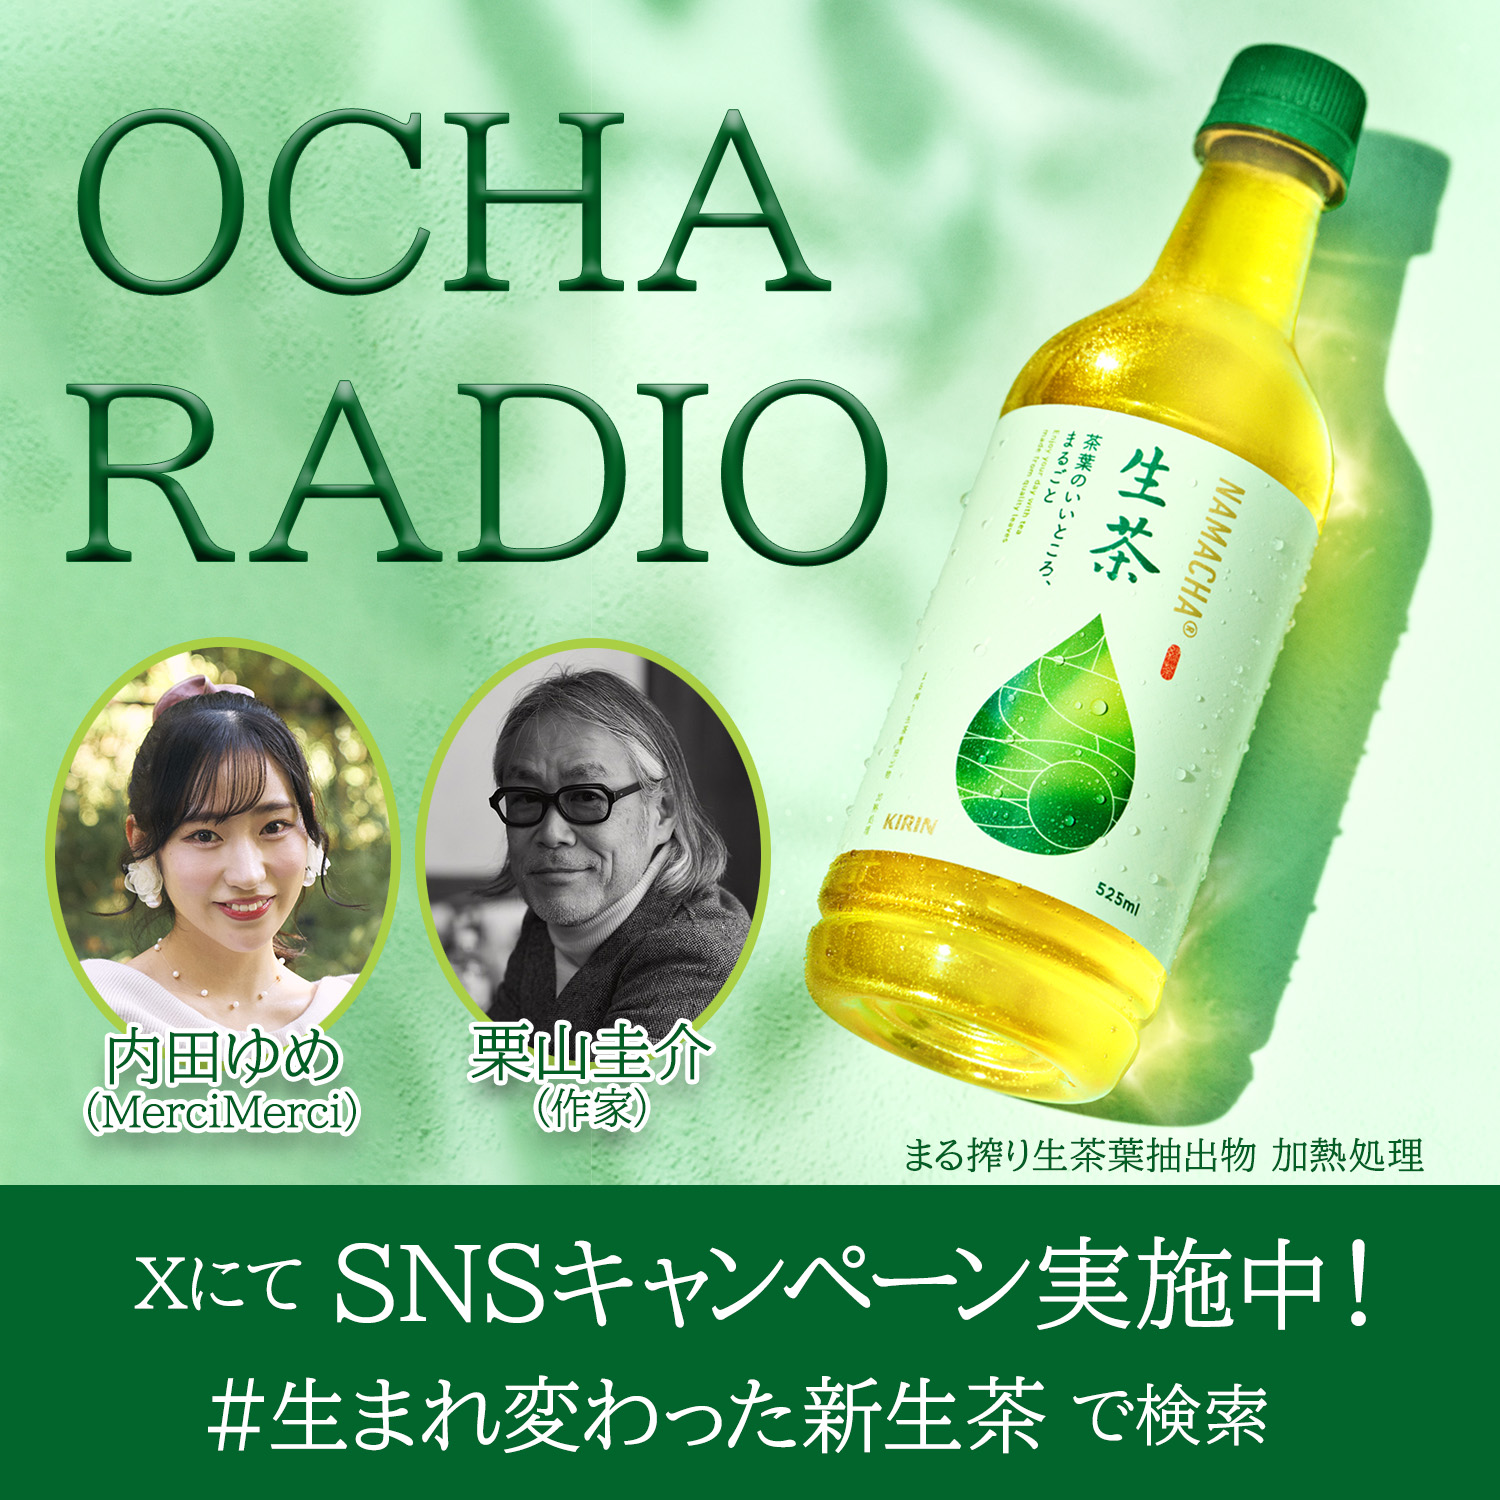 OCHA RADIO supported by キリンビバレッジ株式会社